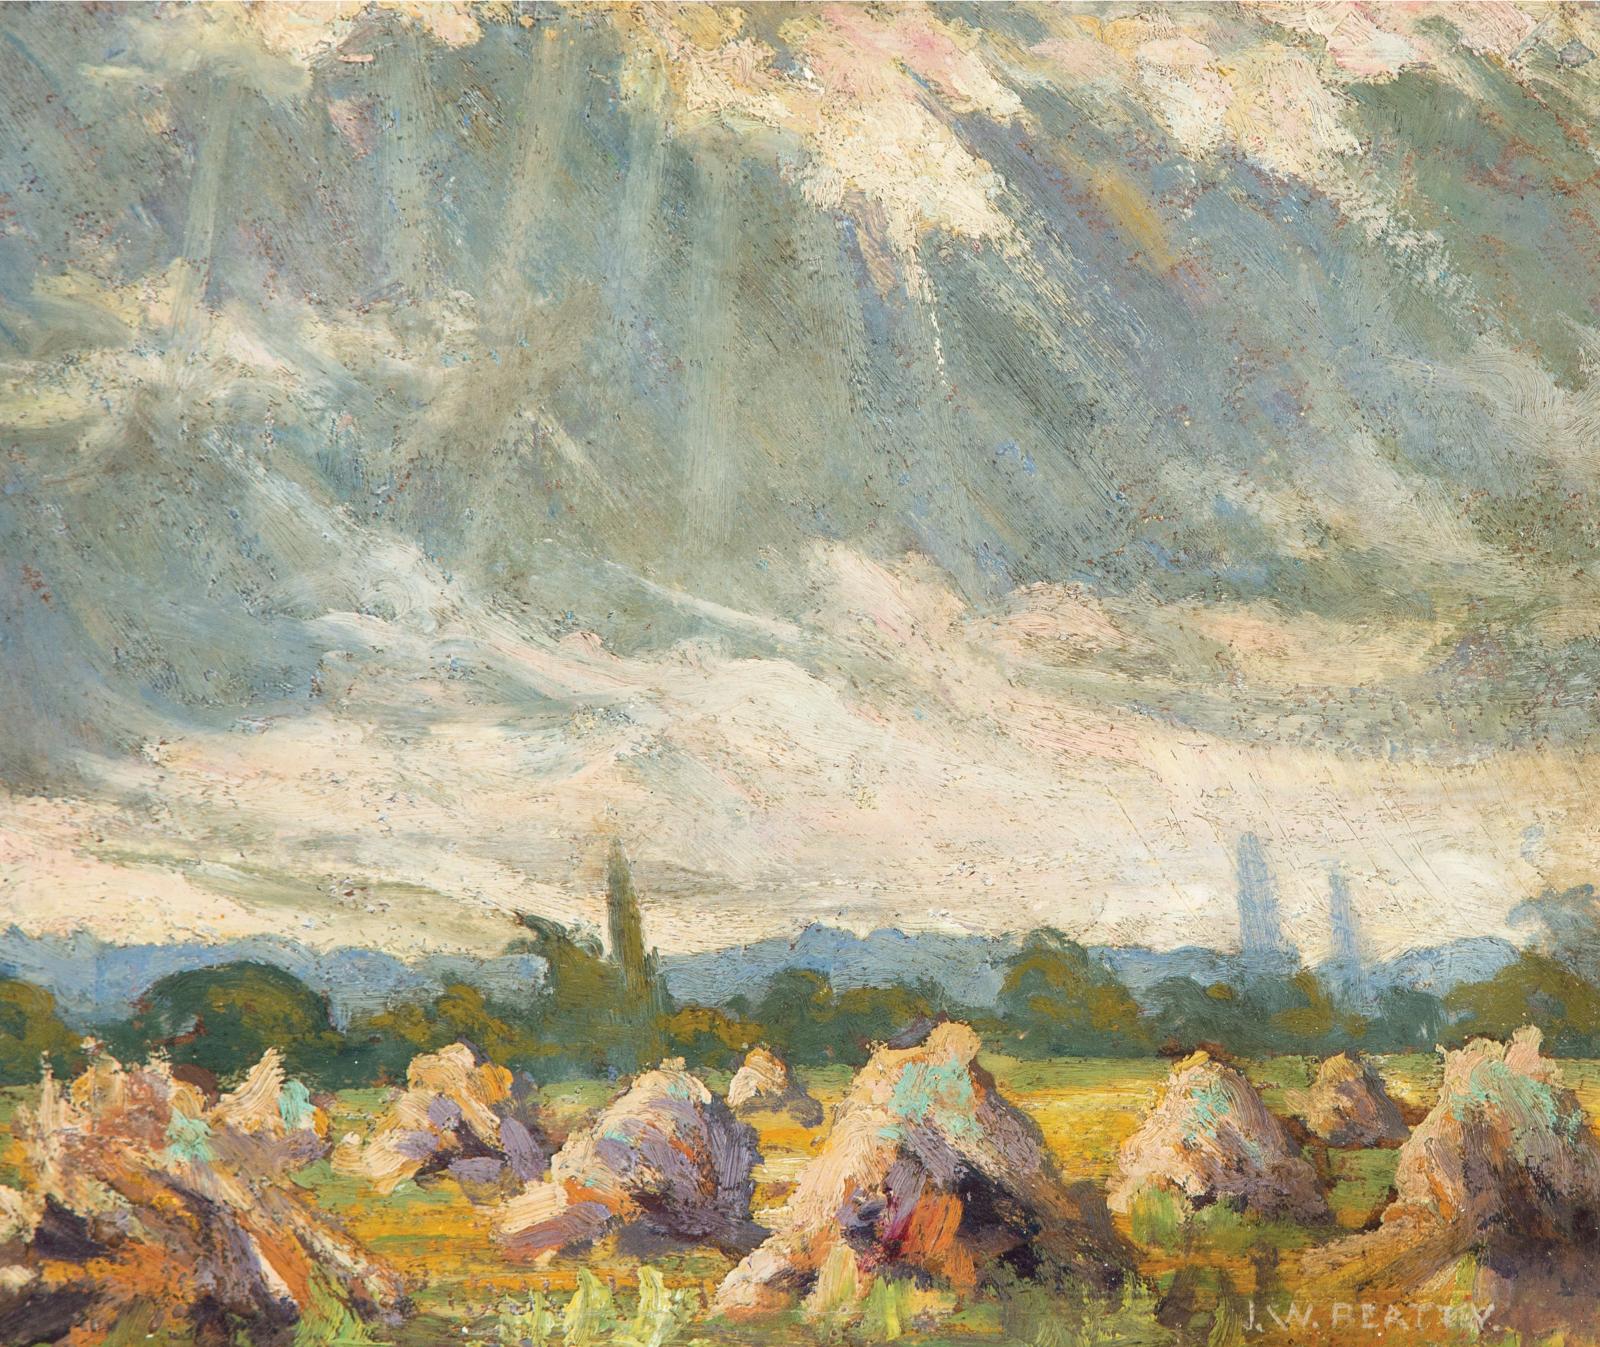 John William (J.W.) Beatty (1869-1941) - Before The Storm